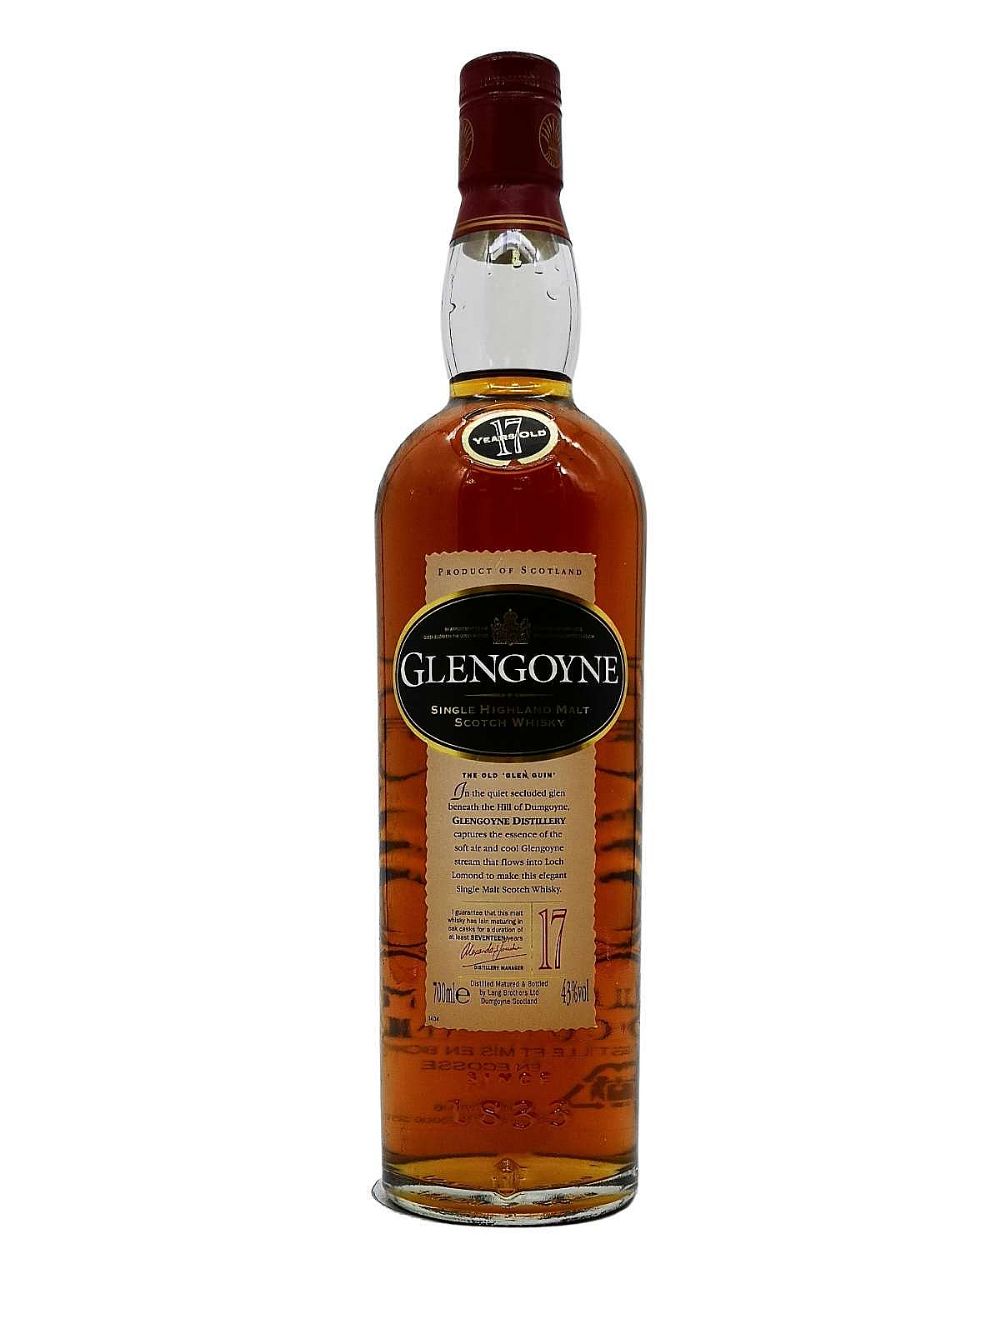 Glengoyne 17 year old Single Malt Scotch Whisky